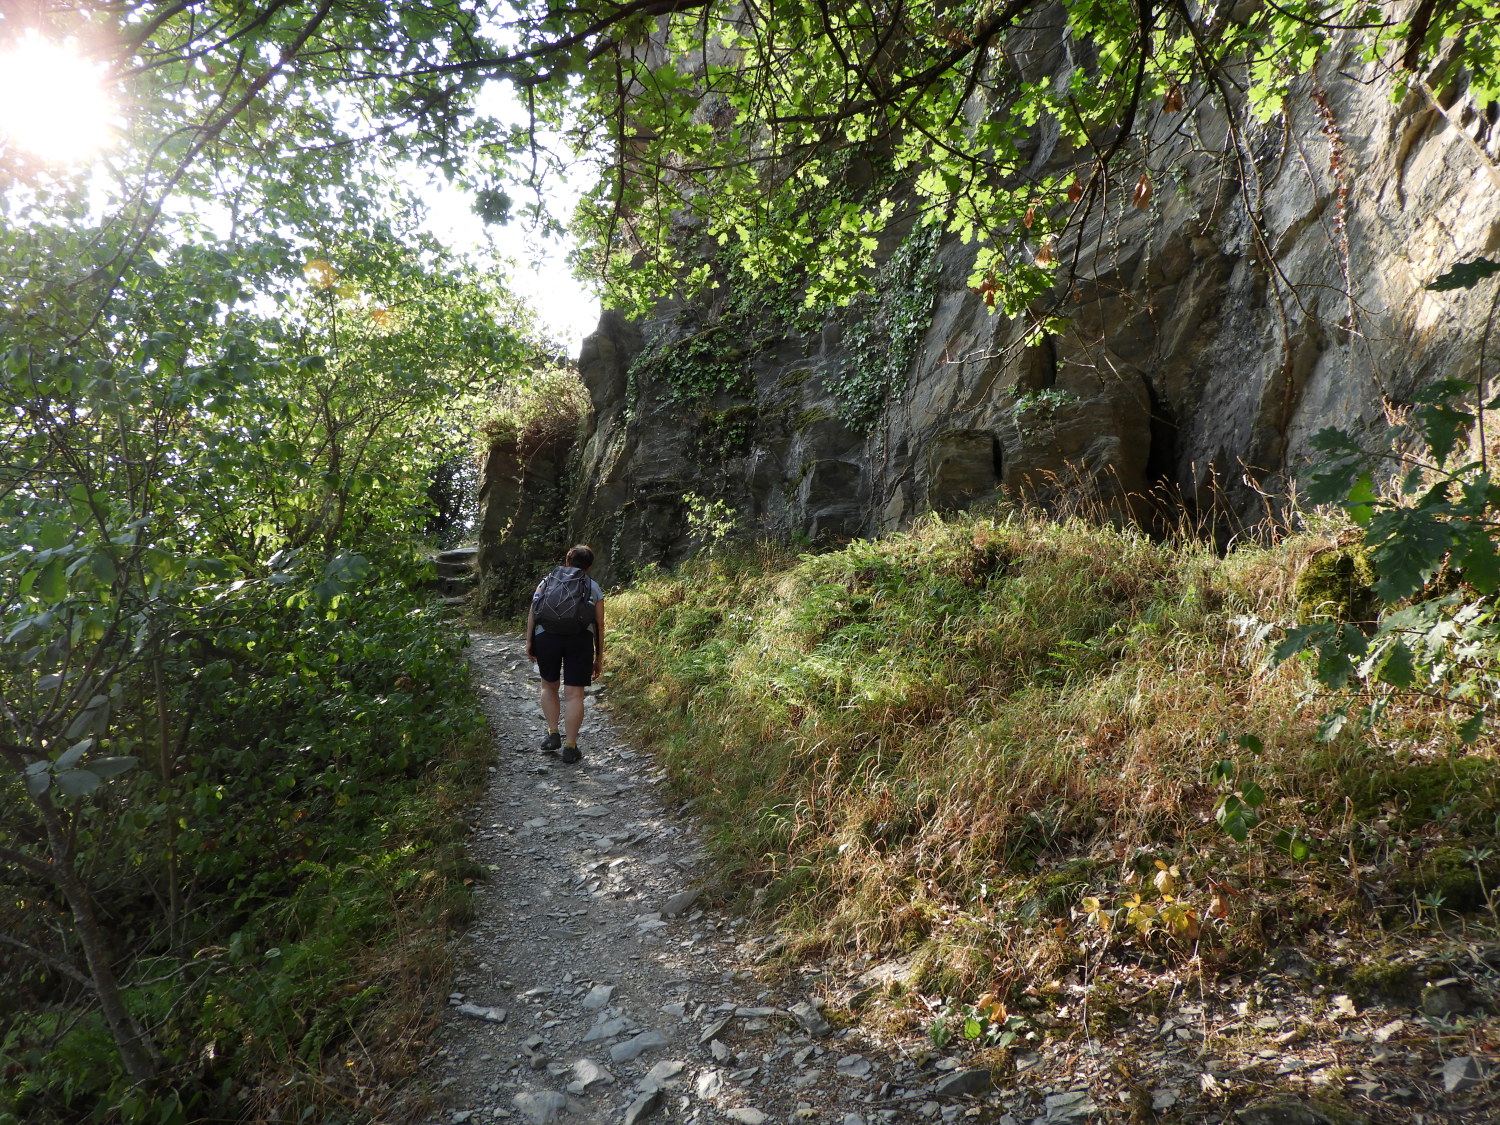 The climb to Burg Schönburg